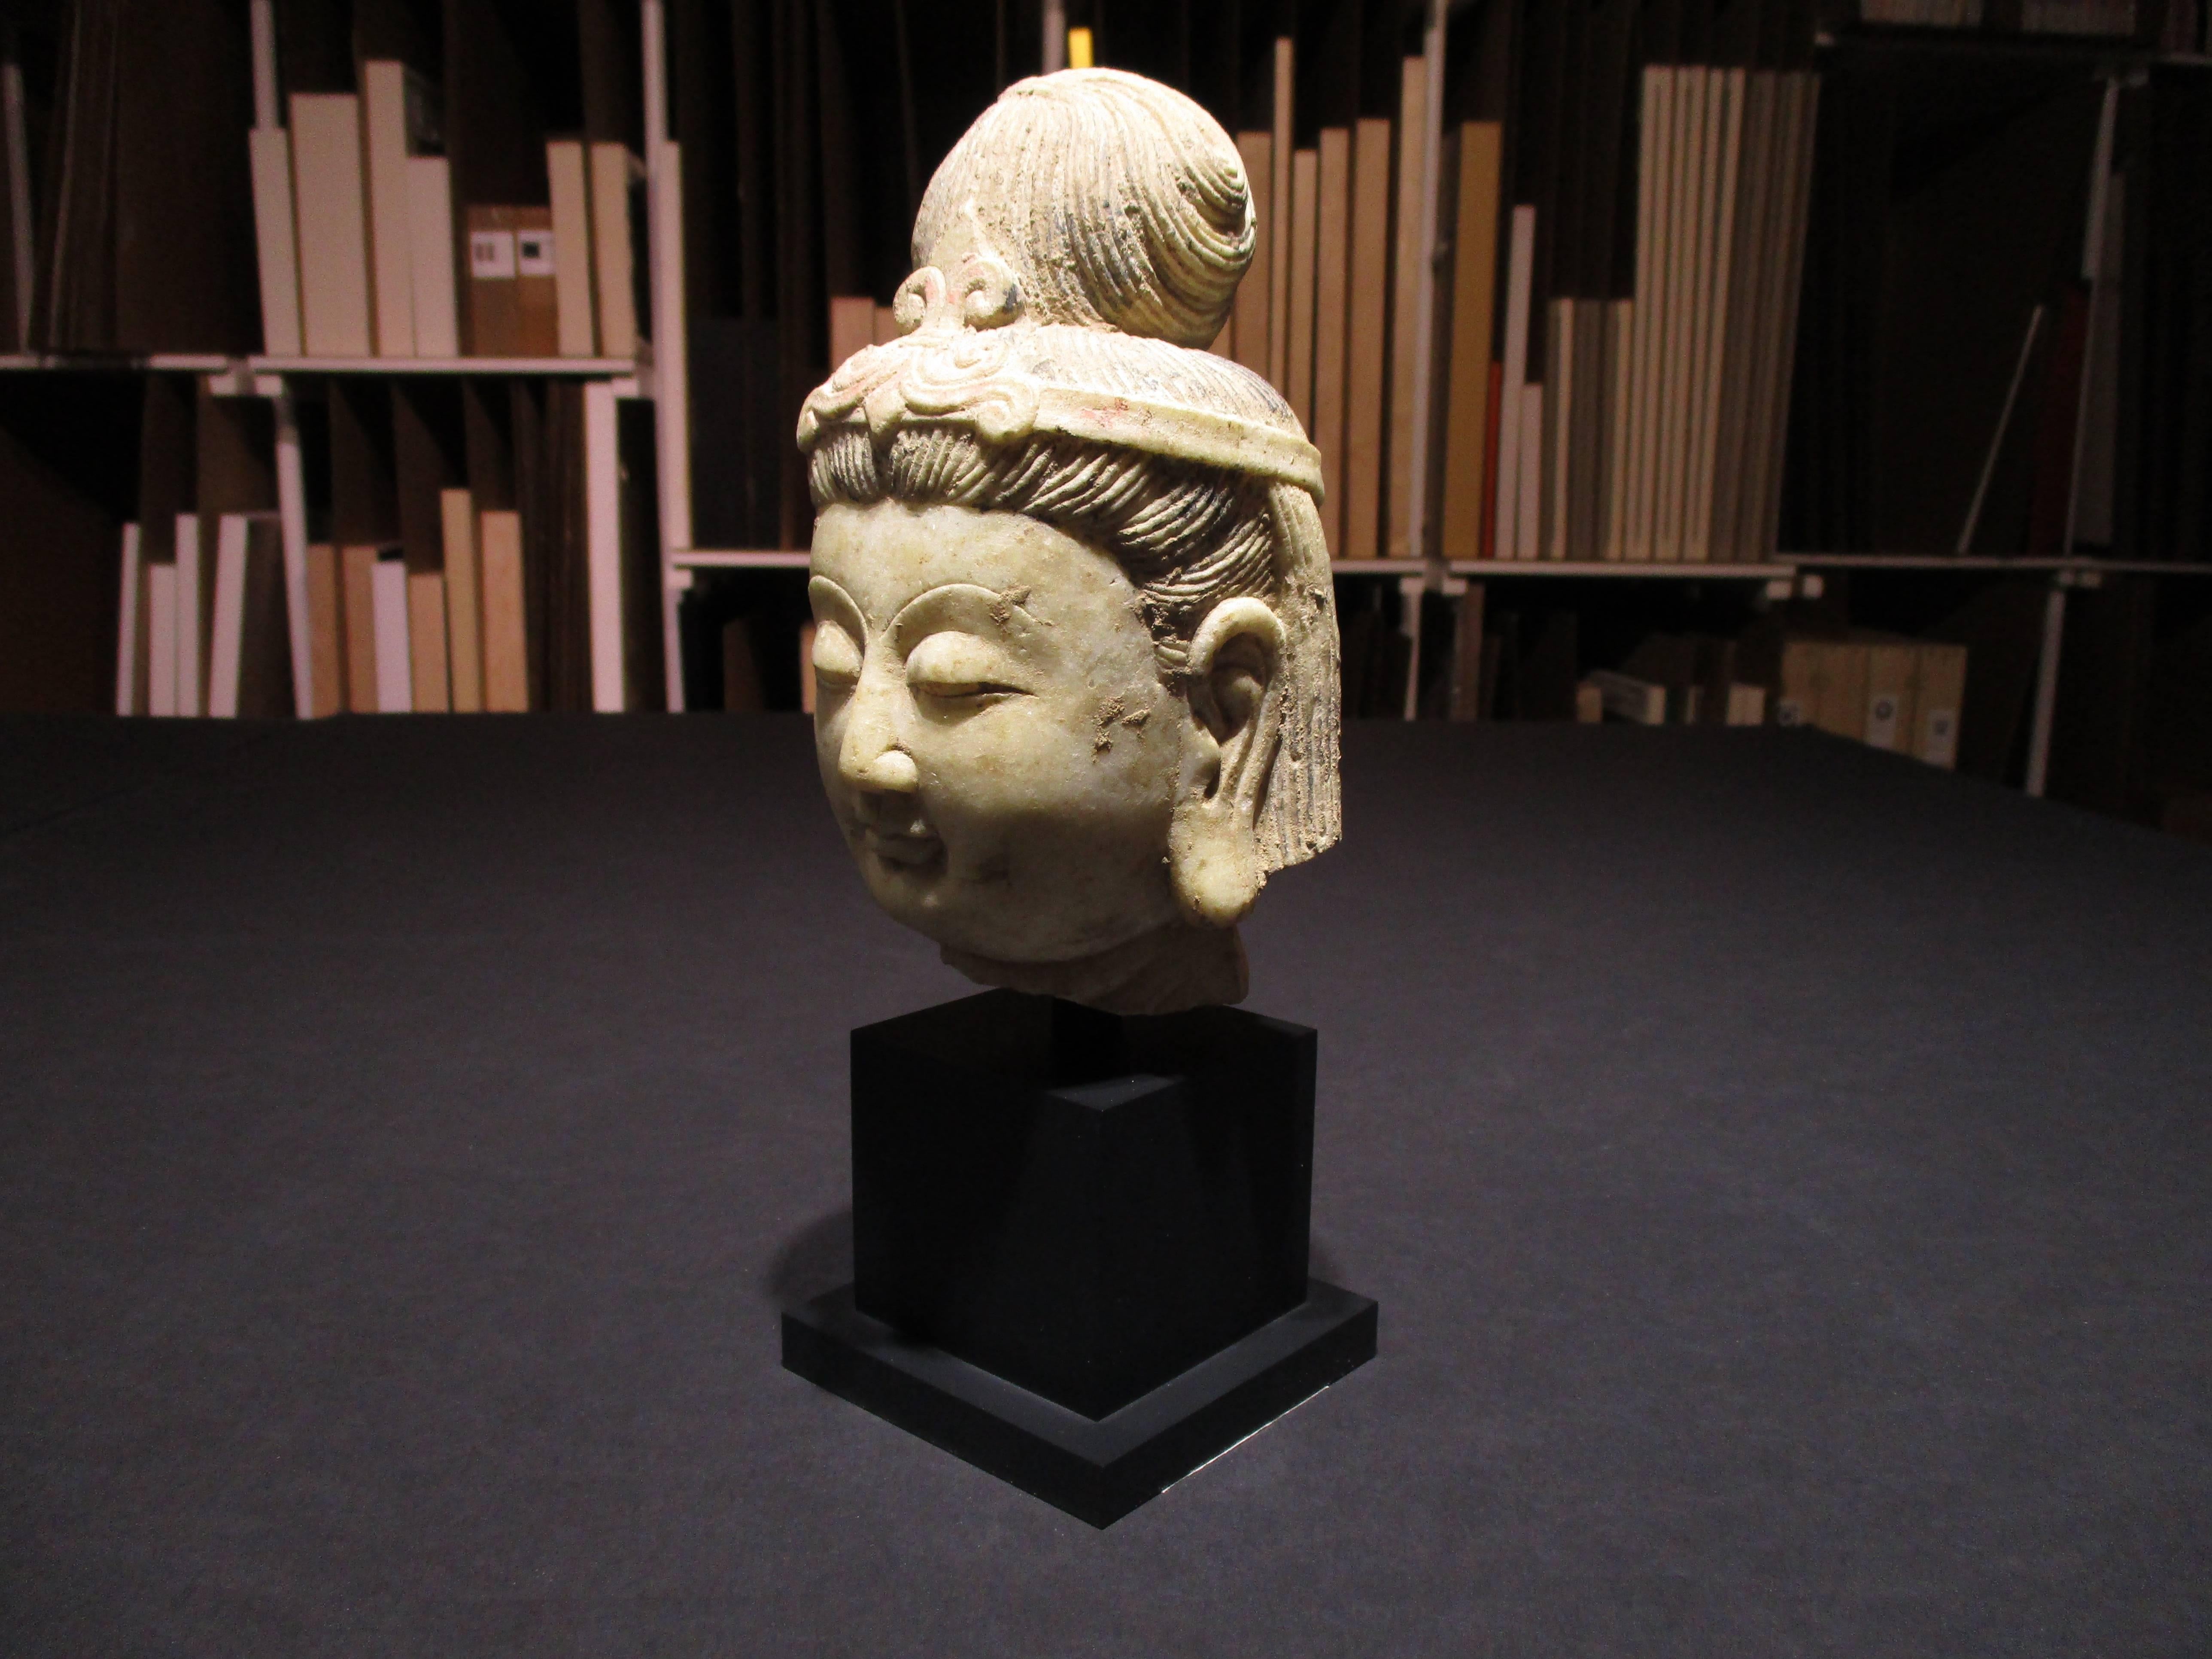 Head of Bodhisattva - Beige Figurative Sculpture by Unknown